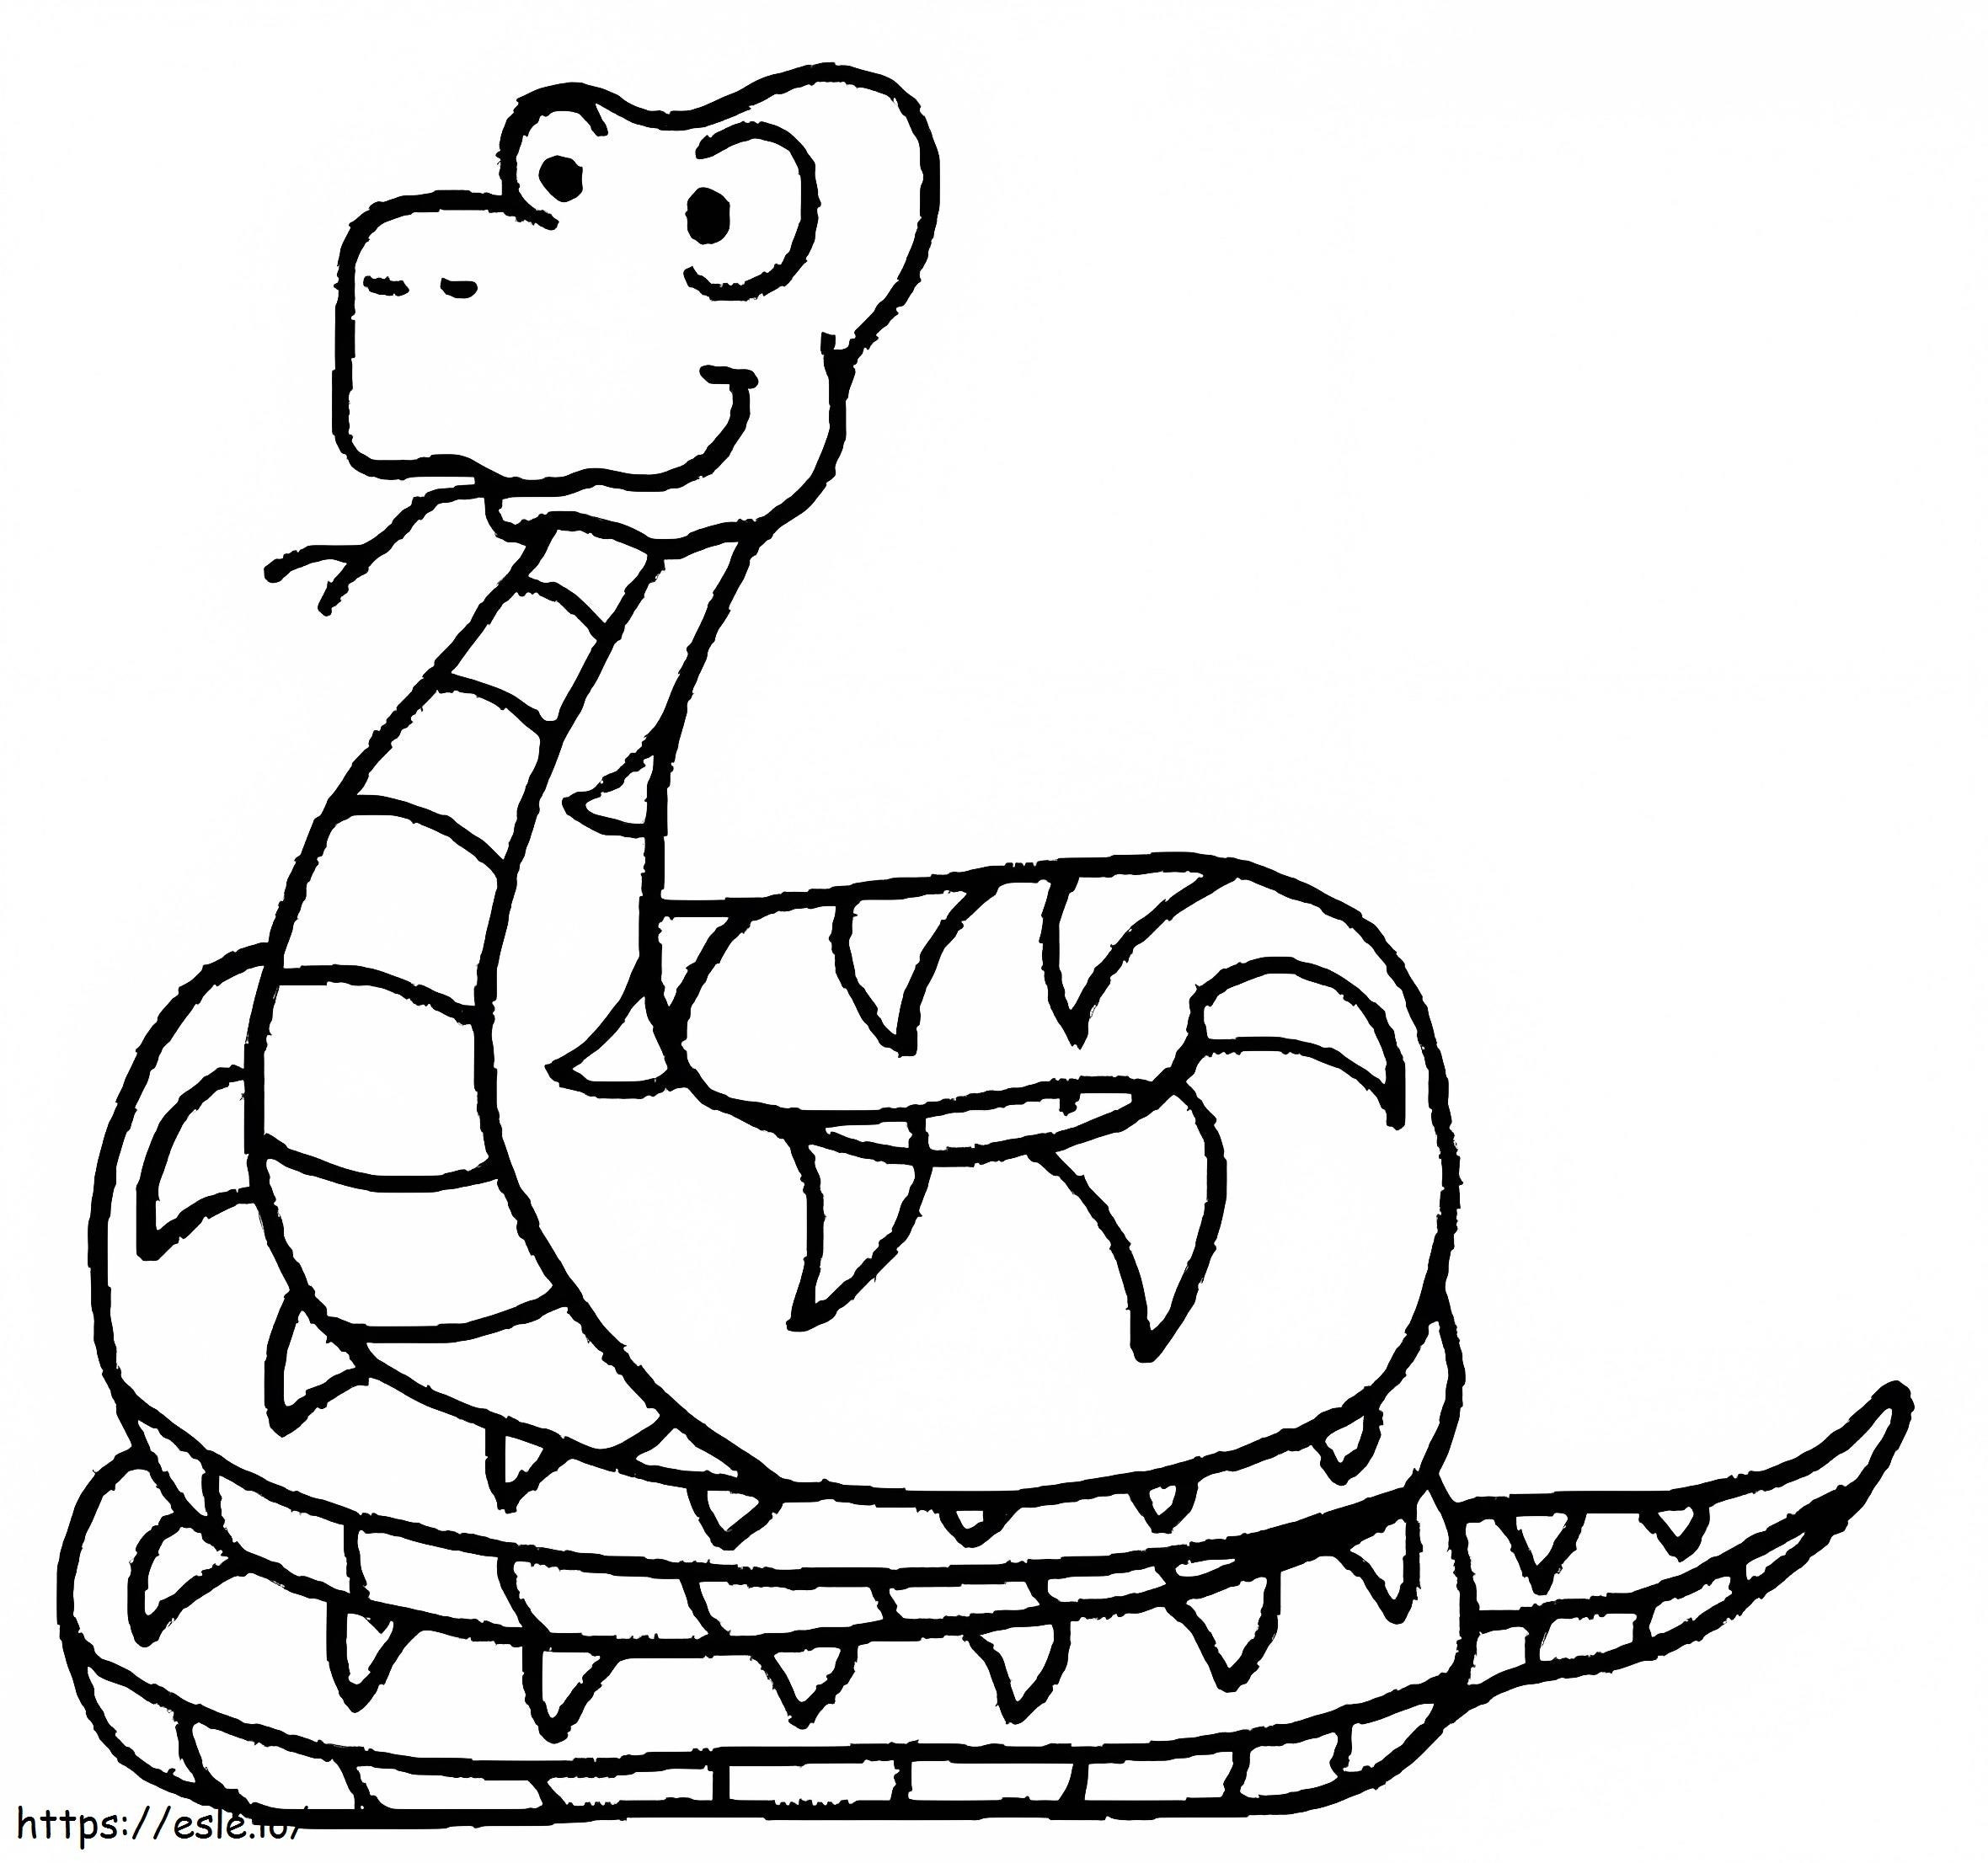 Coloriage Grand serpent à imprimer dessin